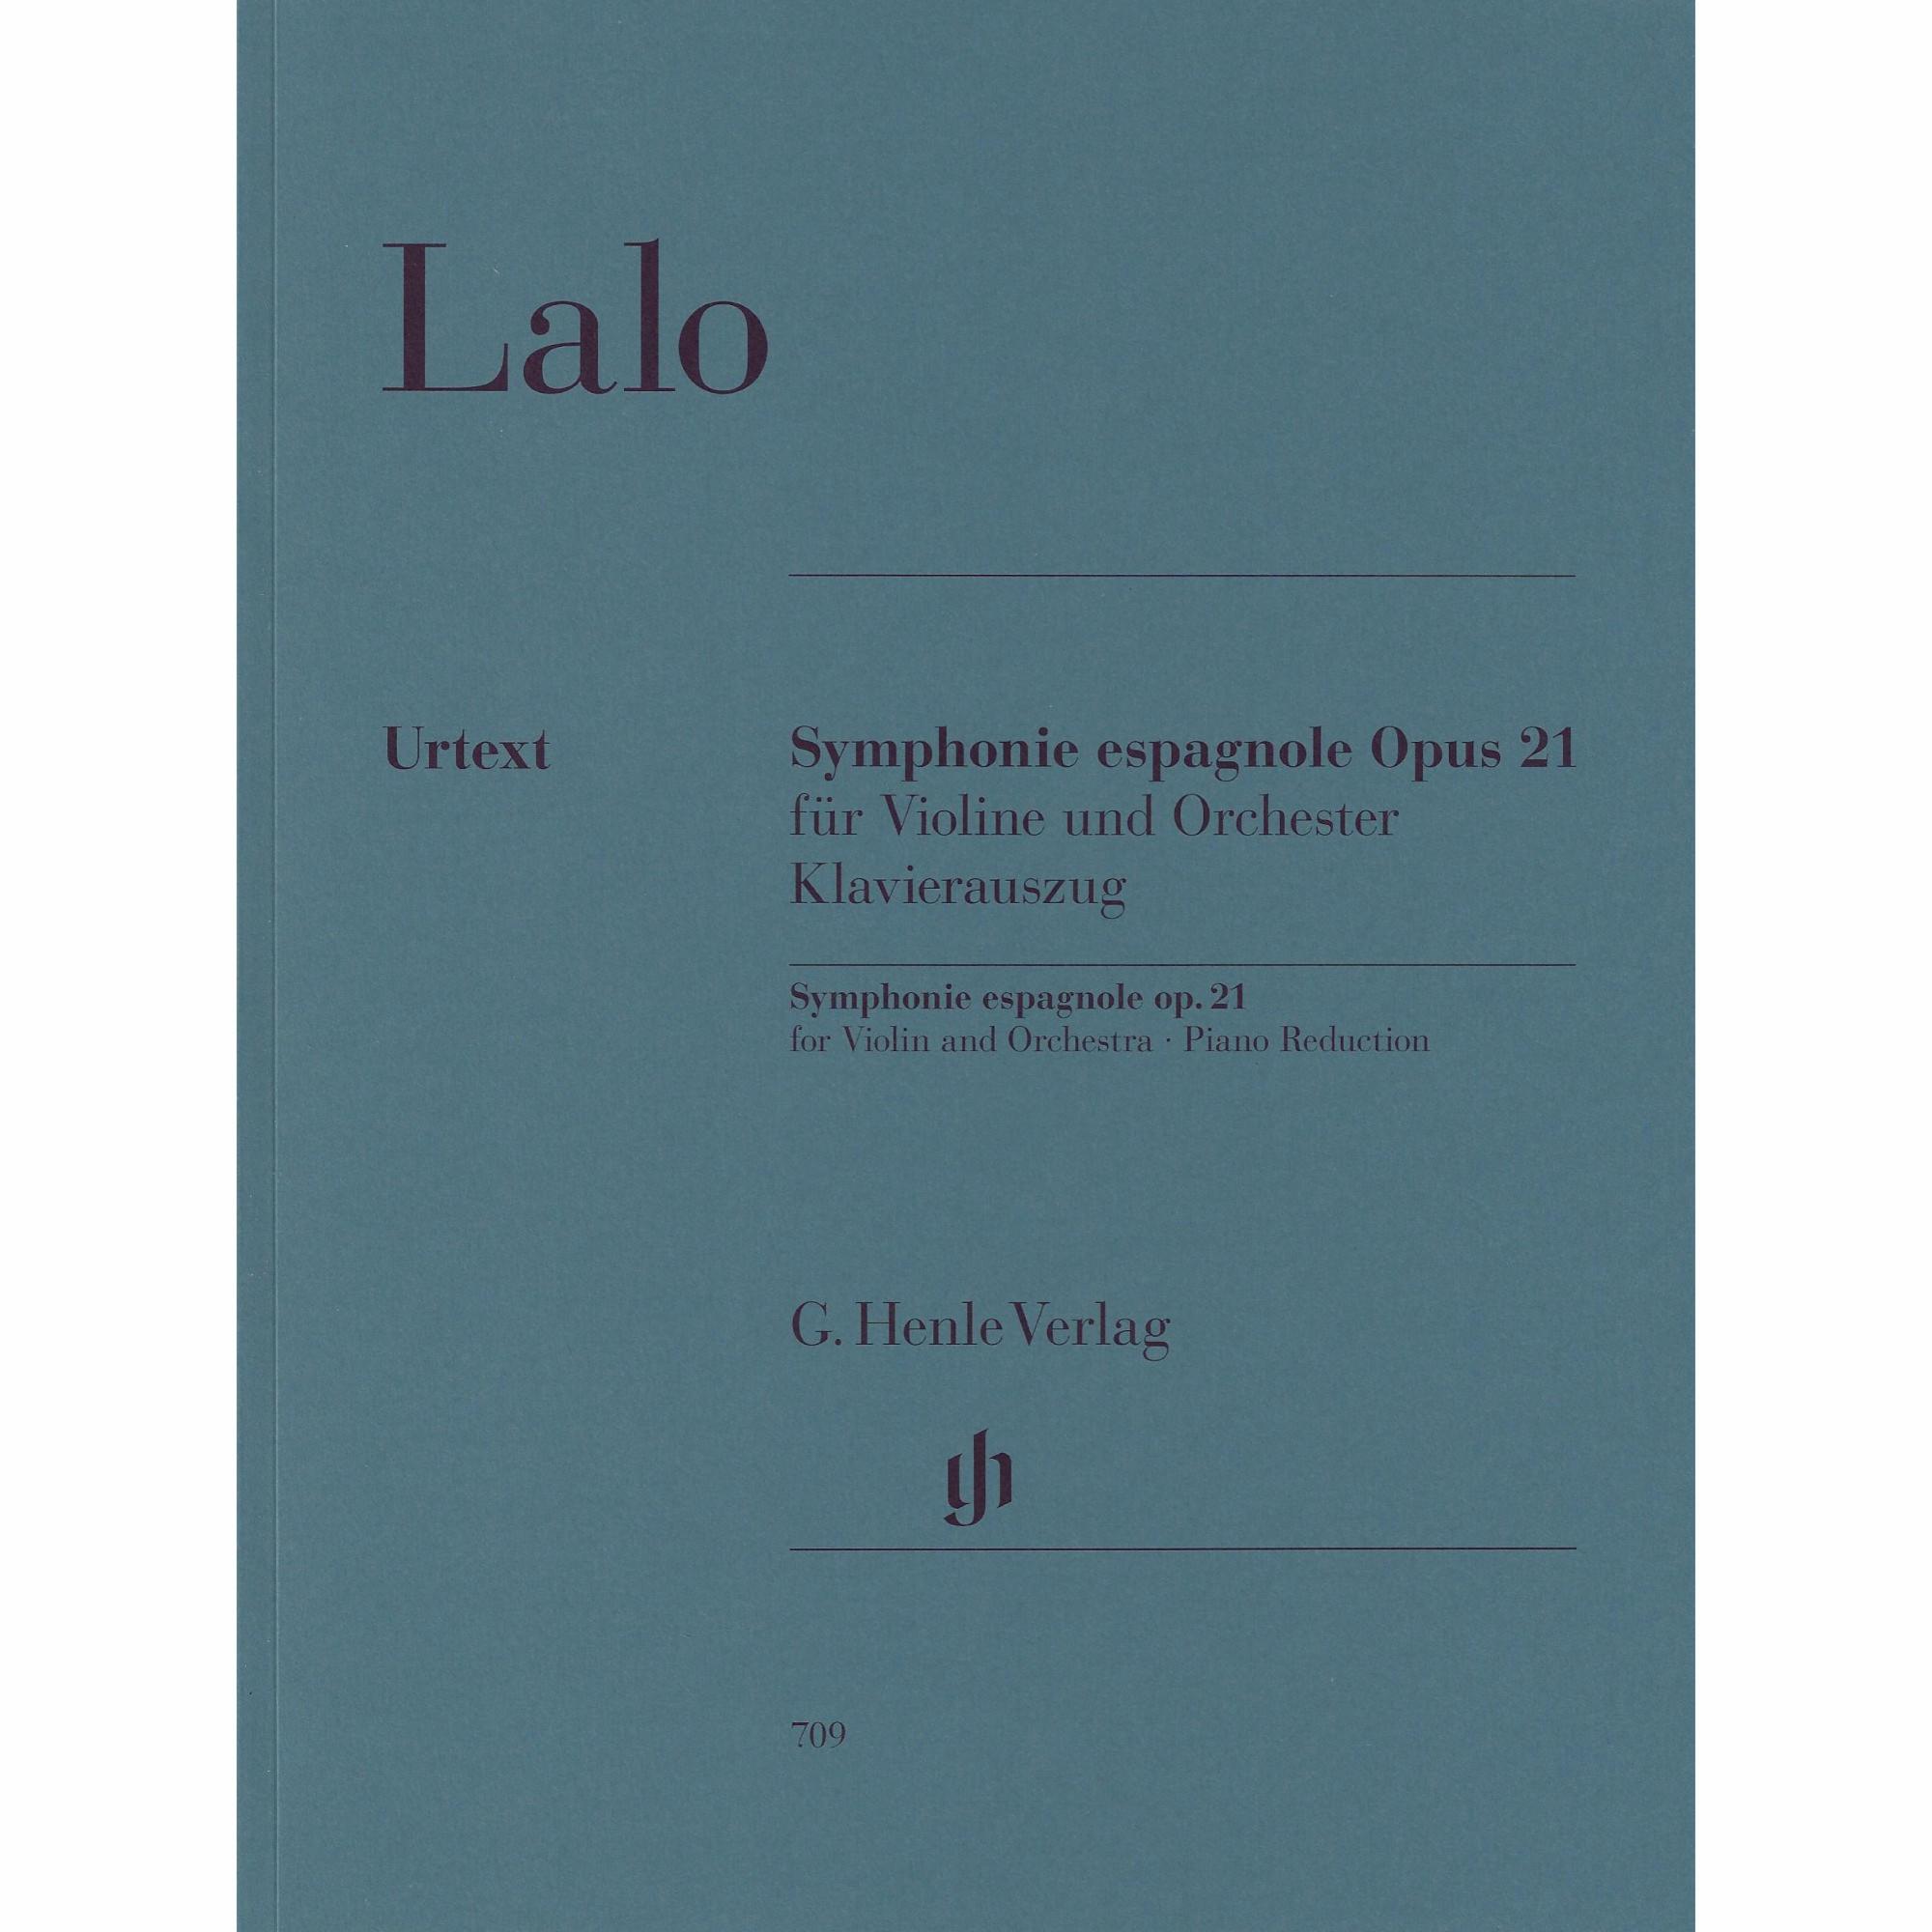 Lalo -- Symphonie espagnole, Op. 21 for Violin and Piano